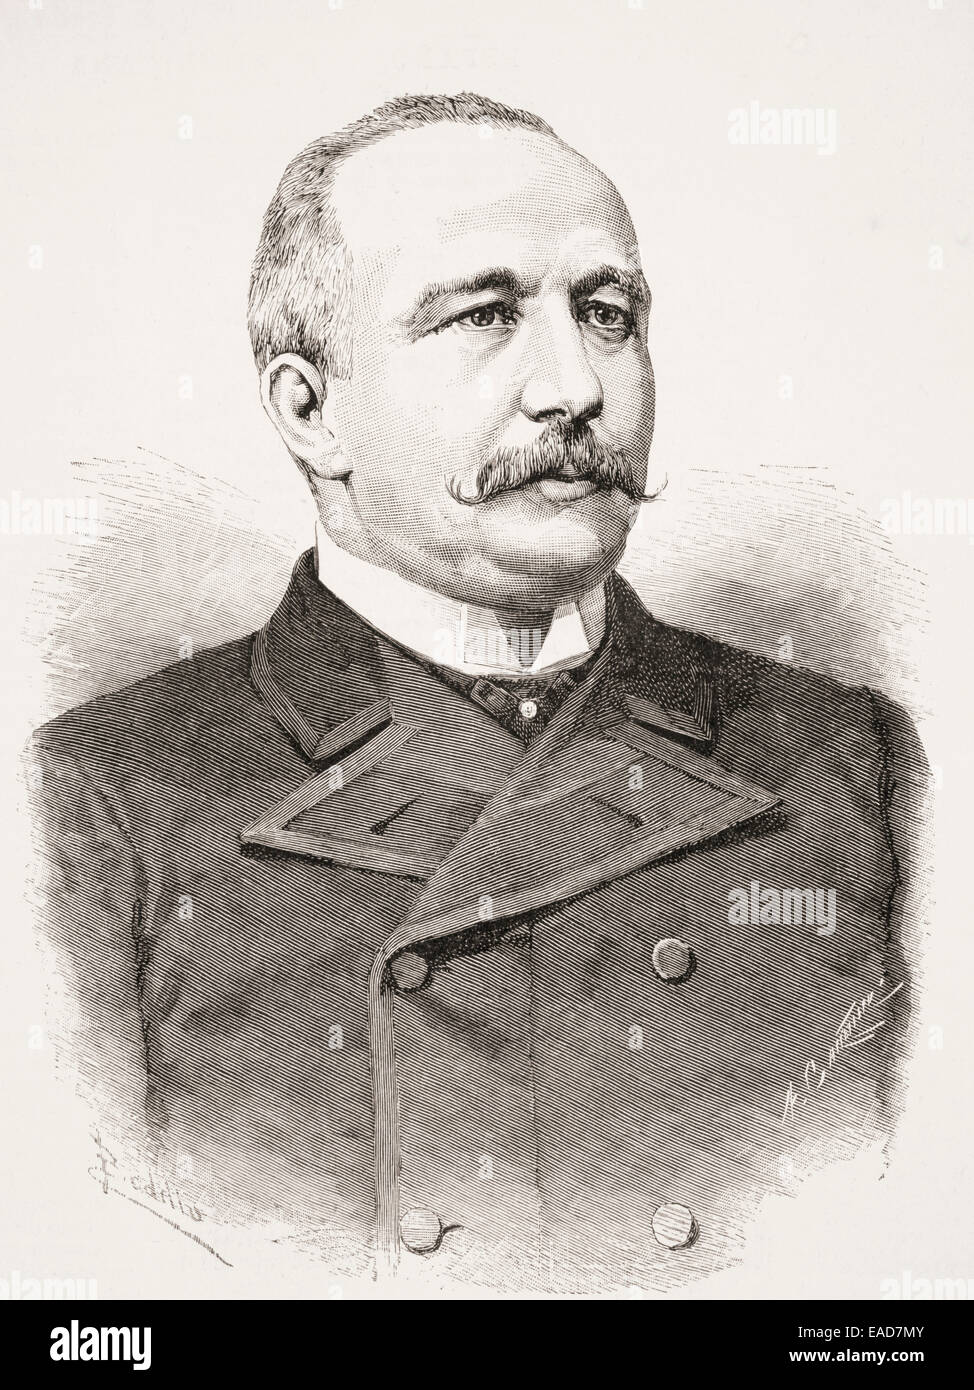 Germán Gamazo y Calvo,  1840 - 1901.  Spanish lawyer and politician.  From La Ilustracion Española y Americana, published 1892. Stock Photo